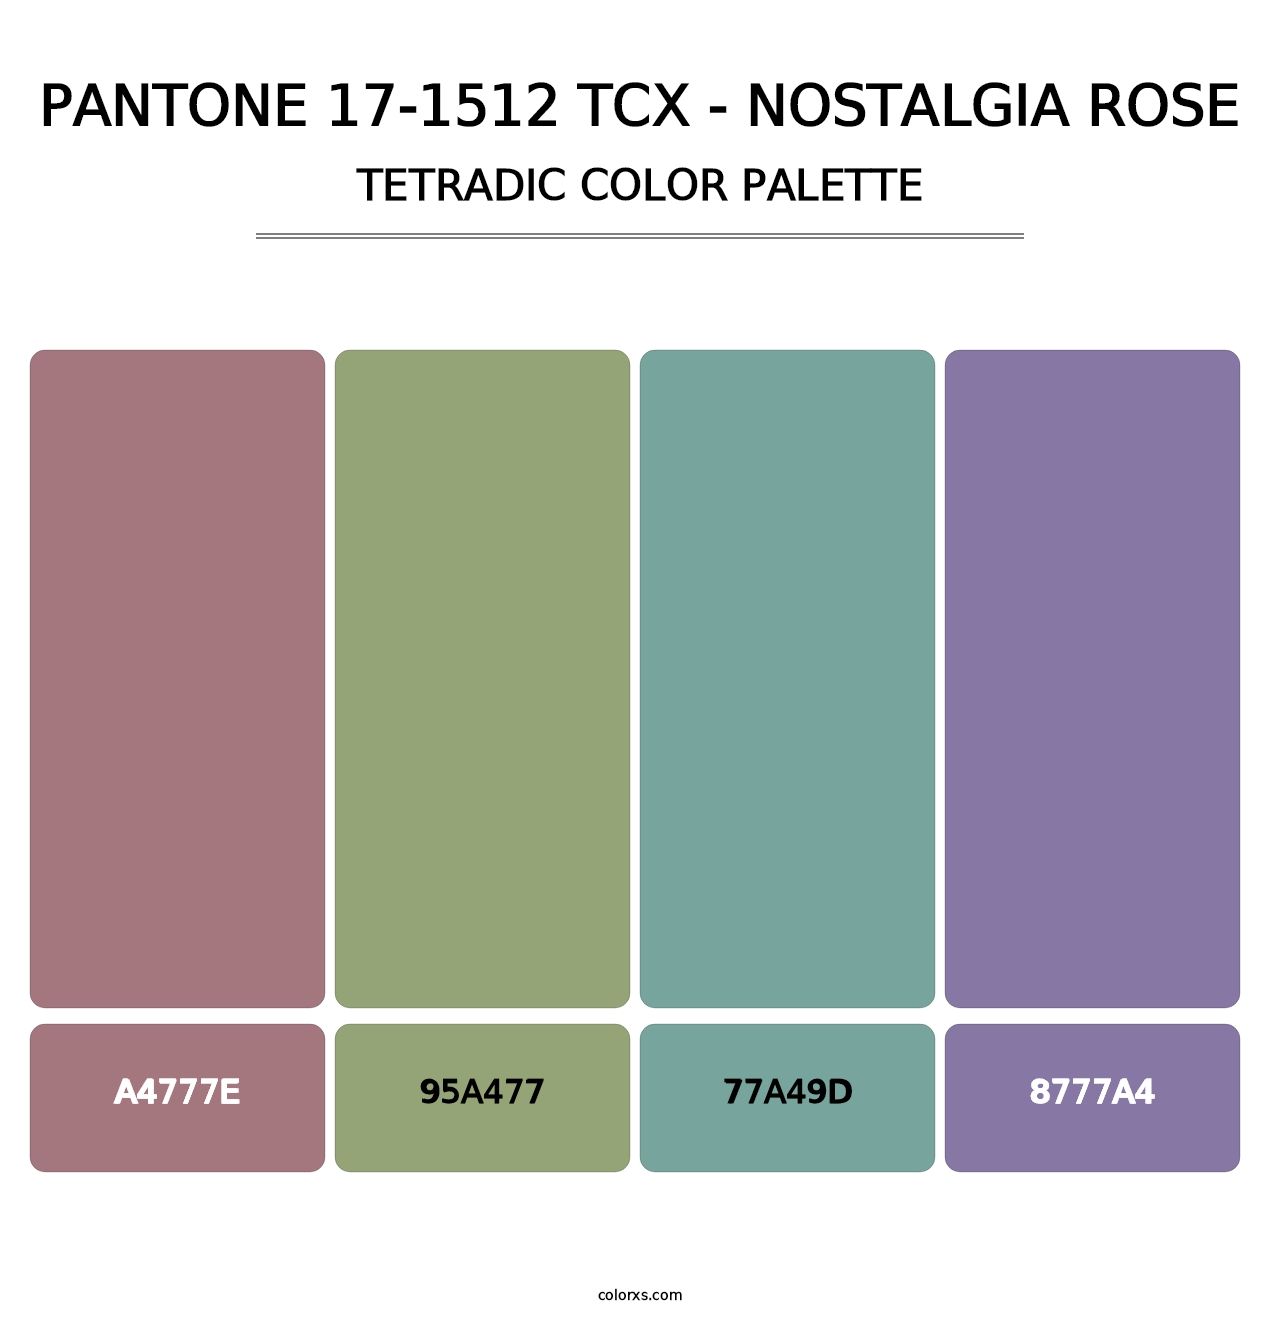 PANTONE 17-1512 TCX - Nostalgia Rose - Tetradic Color Palette